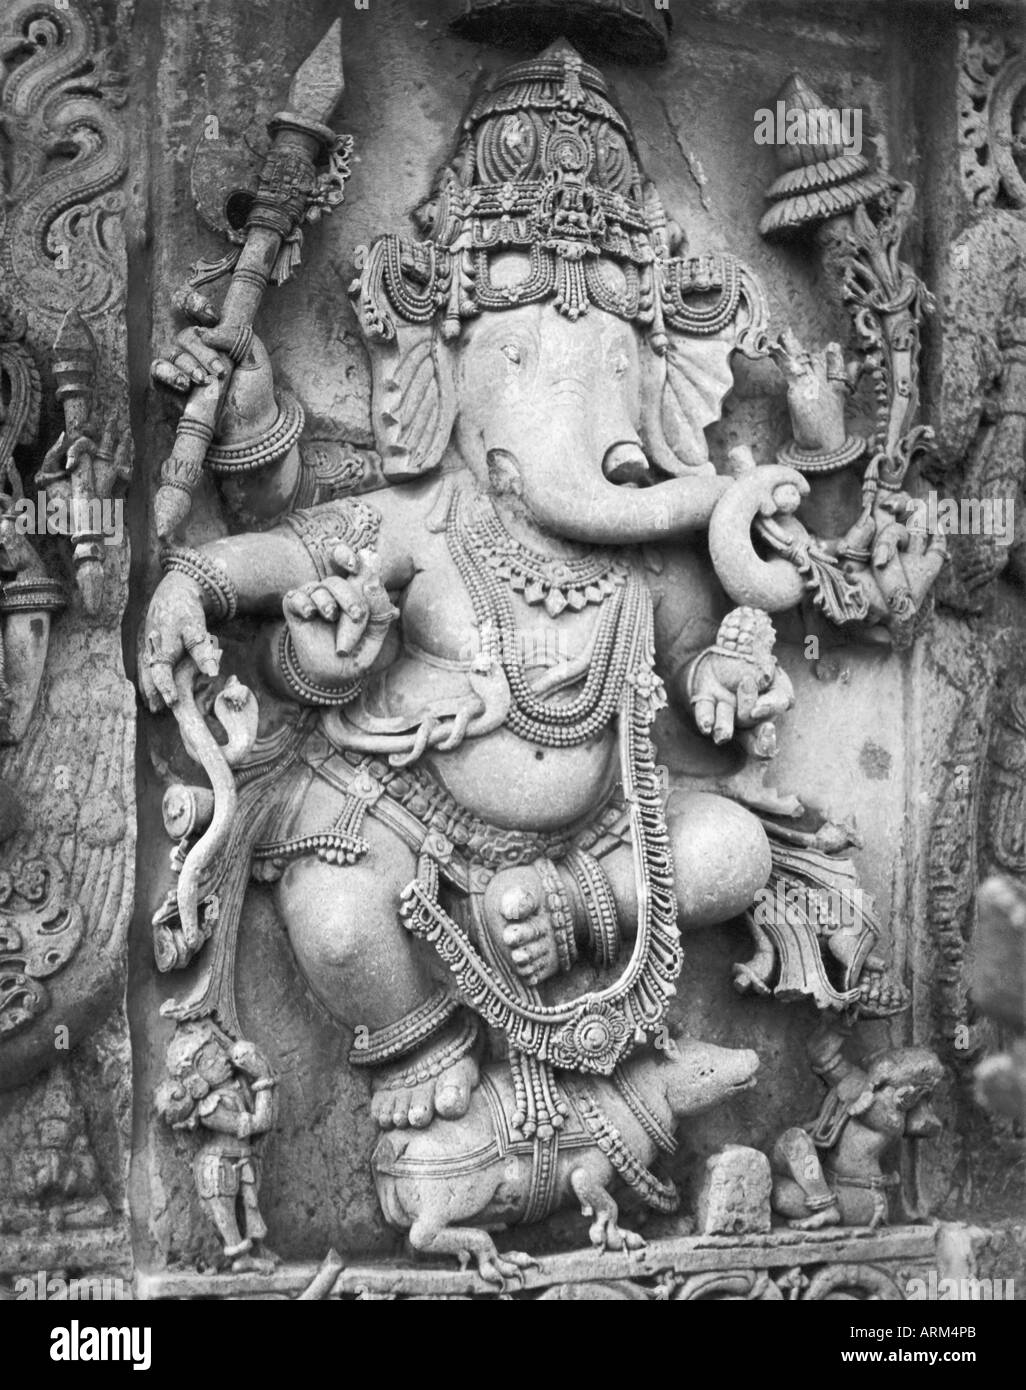 Sculpture de pierre Lord Ganesha au temple Helebid Mysore Karnataka Inde Asie 1940s Banque D'Images